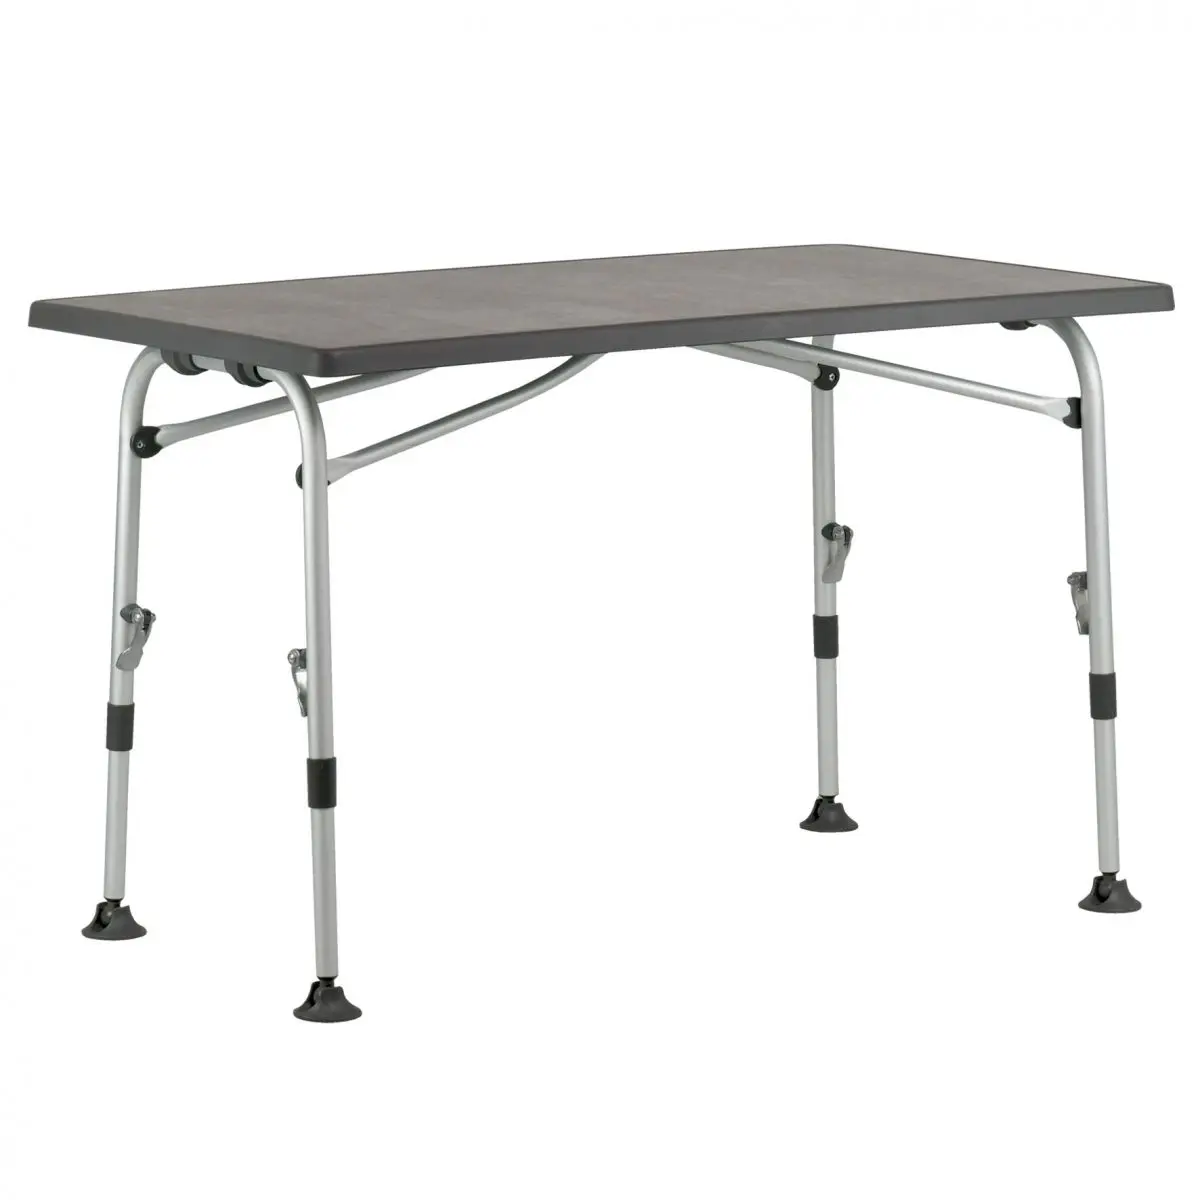 Kempingový stôl Superb - 80 x 60 cm